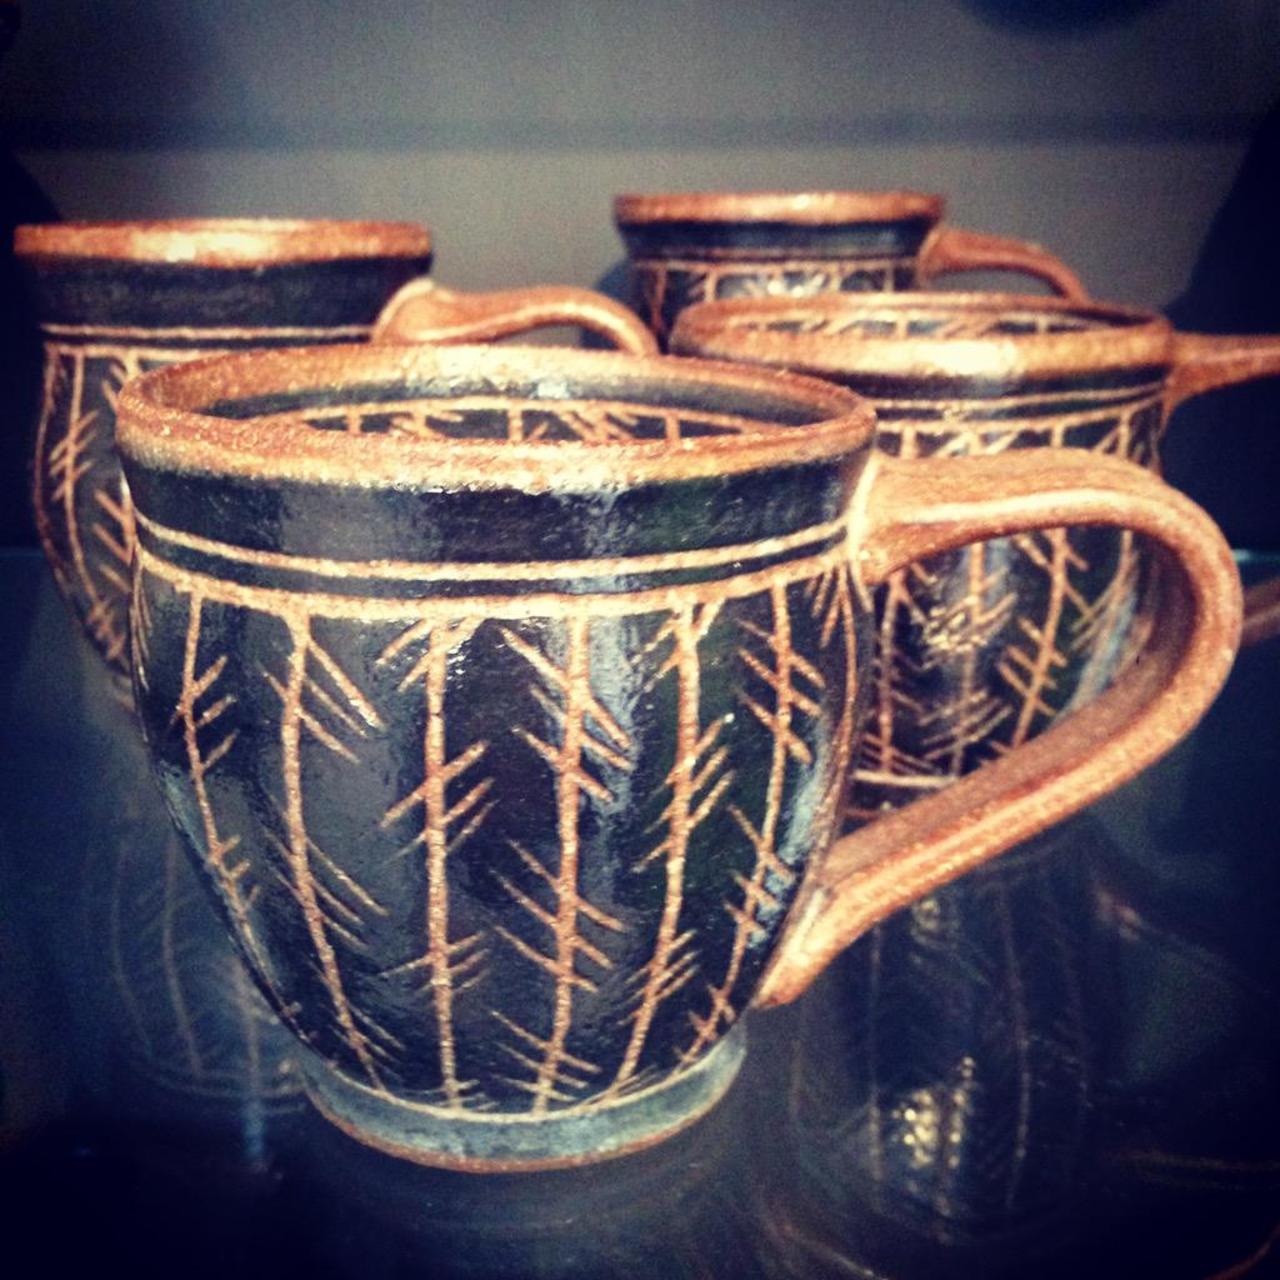 Cups by Douglas Hough #ceramics #cups #dinnerware #design #teatime #contemporary http://t.co/eKWM9J4Ame